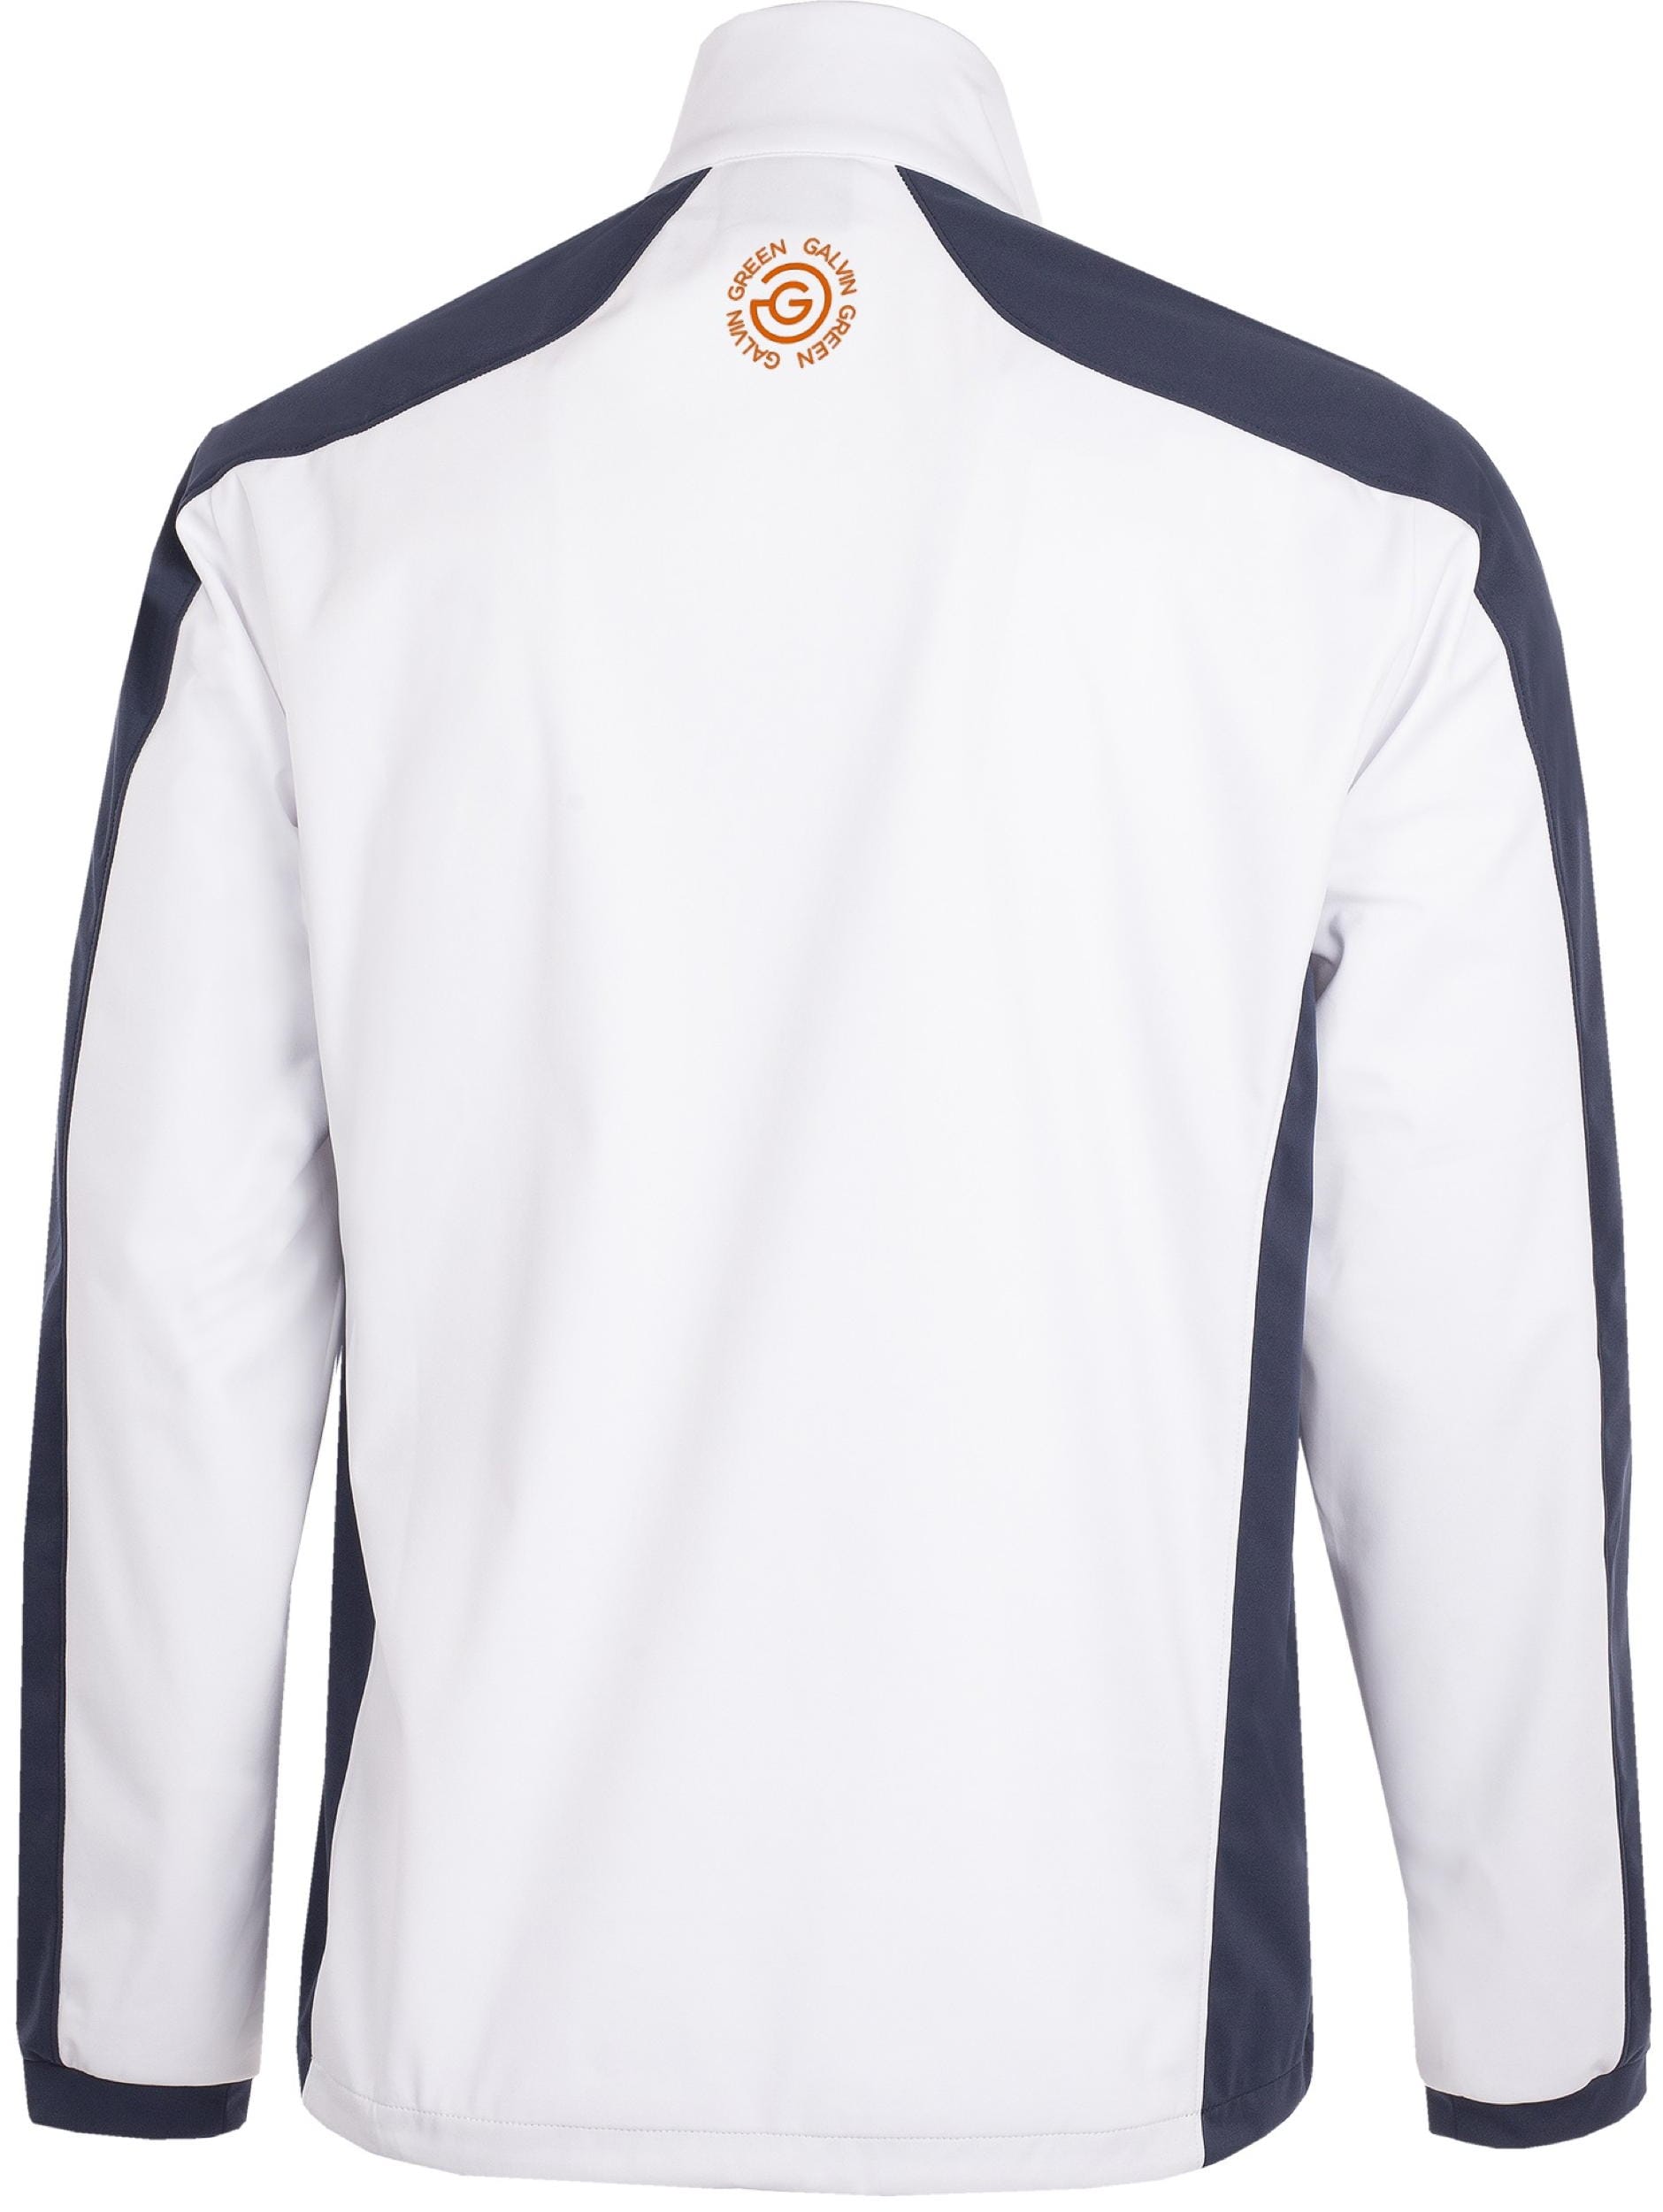 Galvin Green Lawrence Interface Windshirt, white/navy/orange